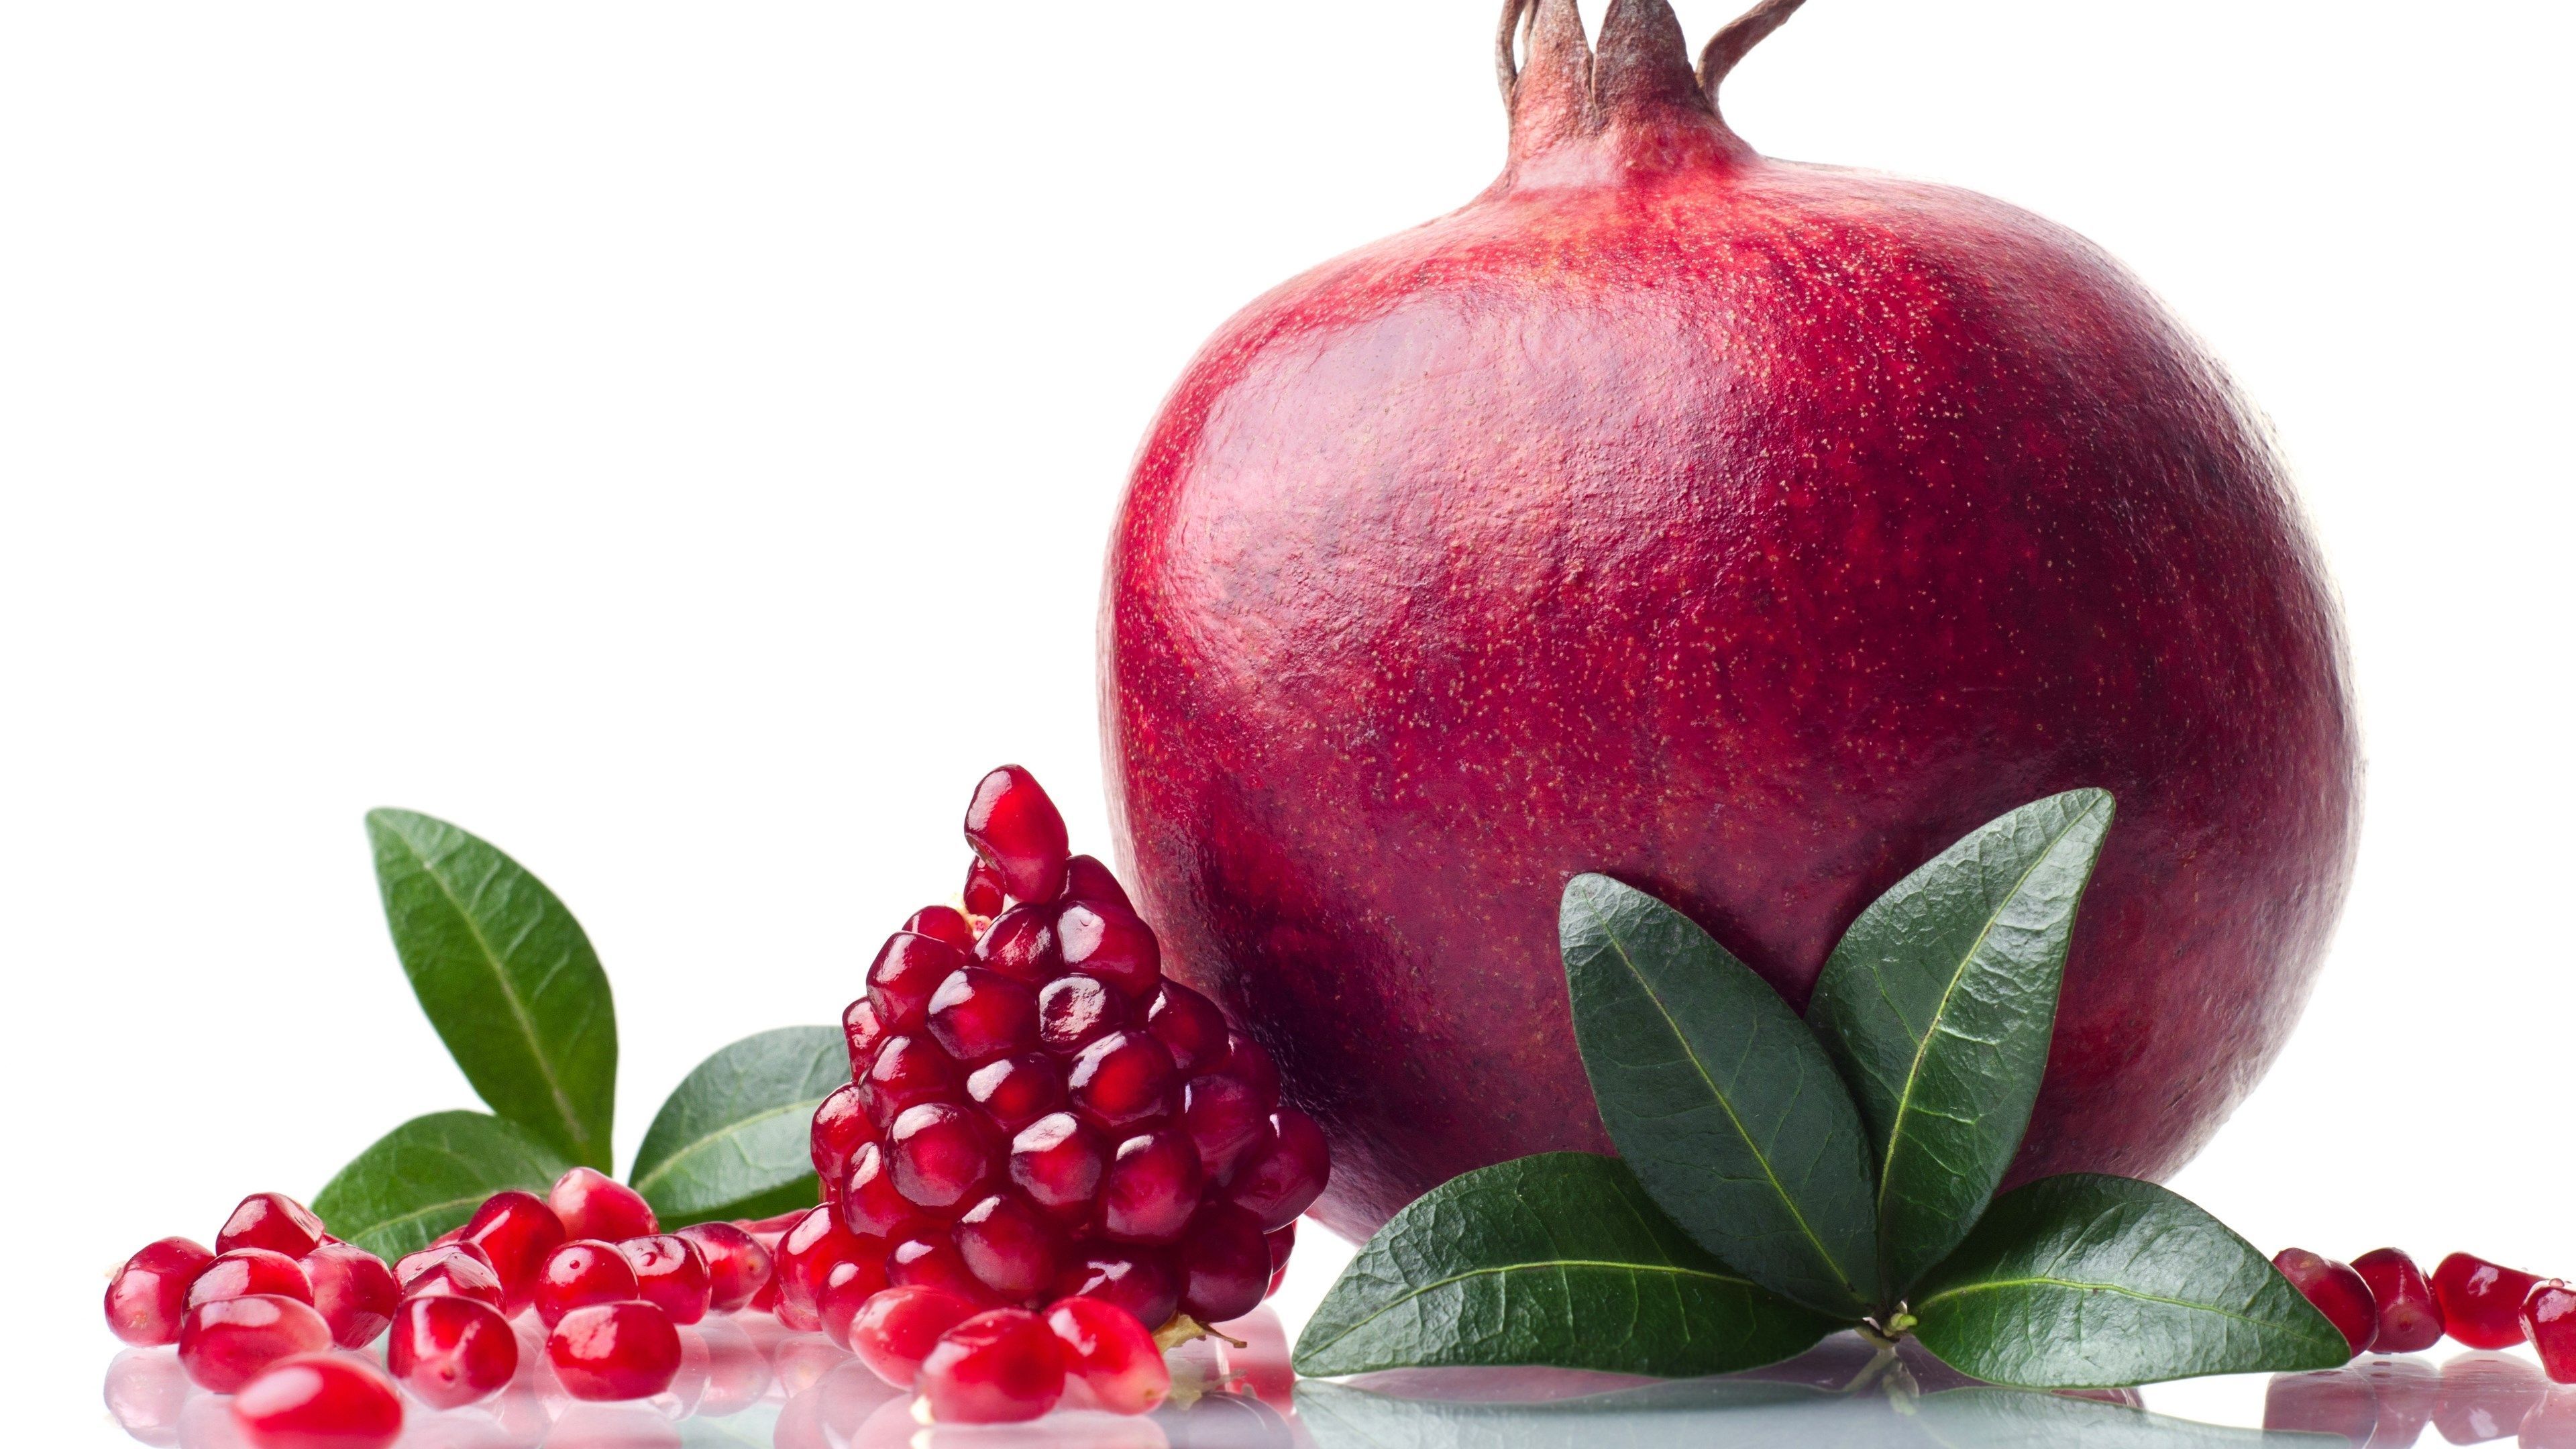 4k new full HD wallpaper (3840x2160). Pomegranate picture, Pomegranate, Pomegranate fruit